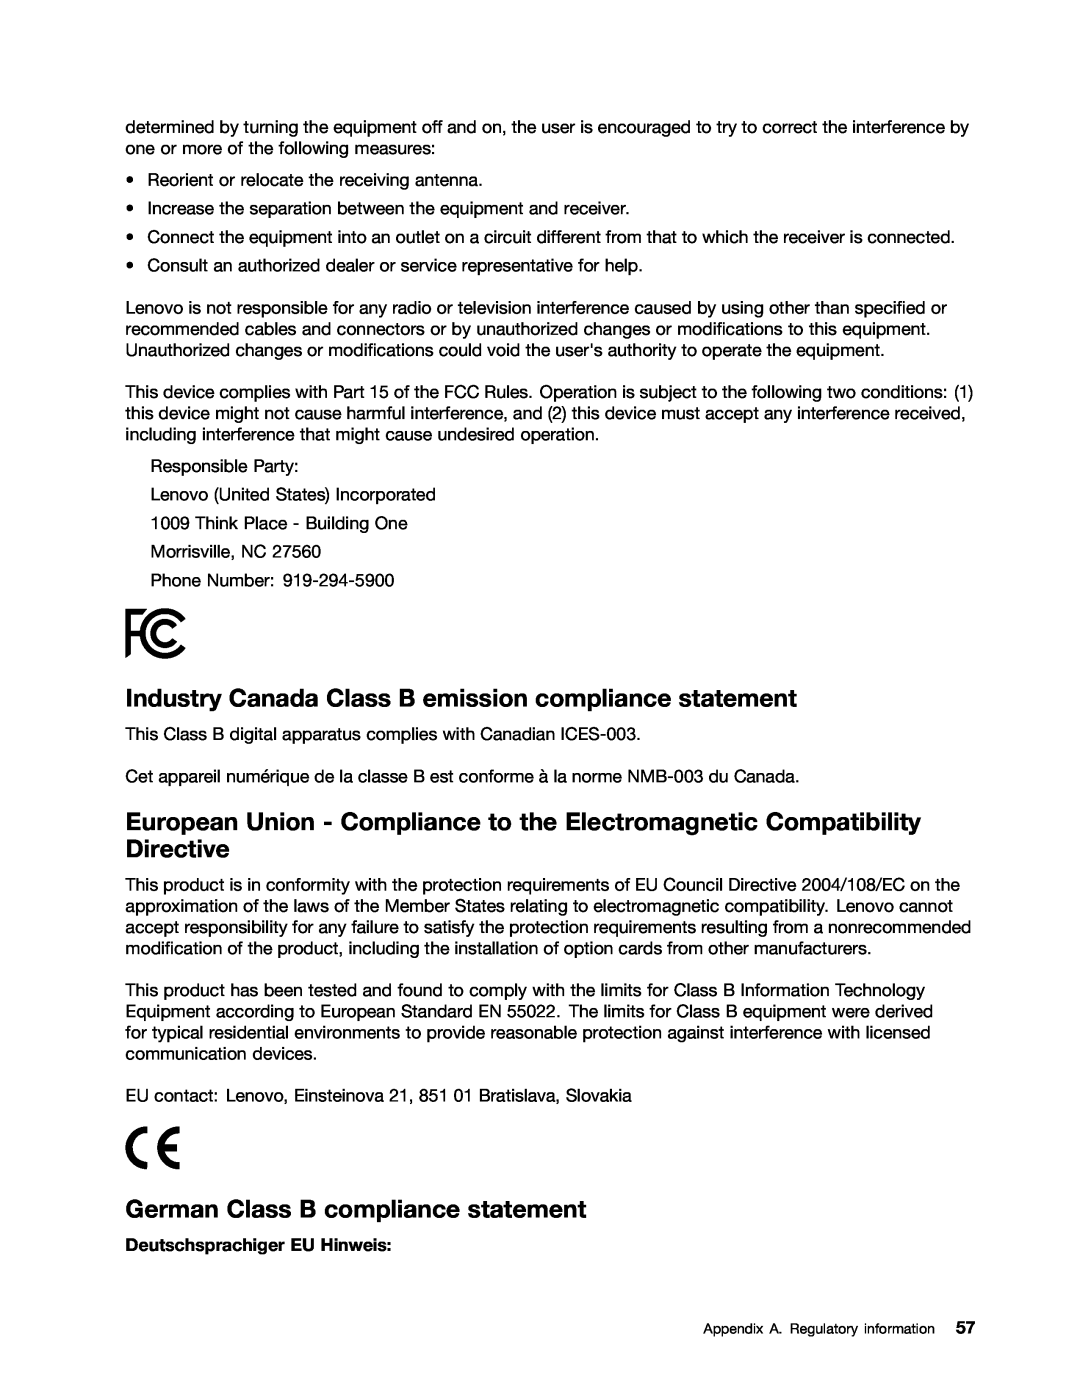 Lenovo 367923U, 36822AU, 368229U Industry Canada Class B emission compliance statement, German Class B compliance statement 